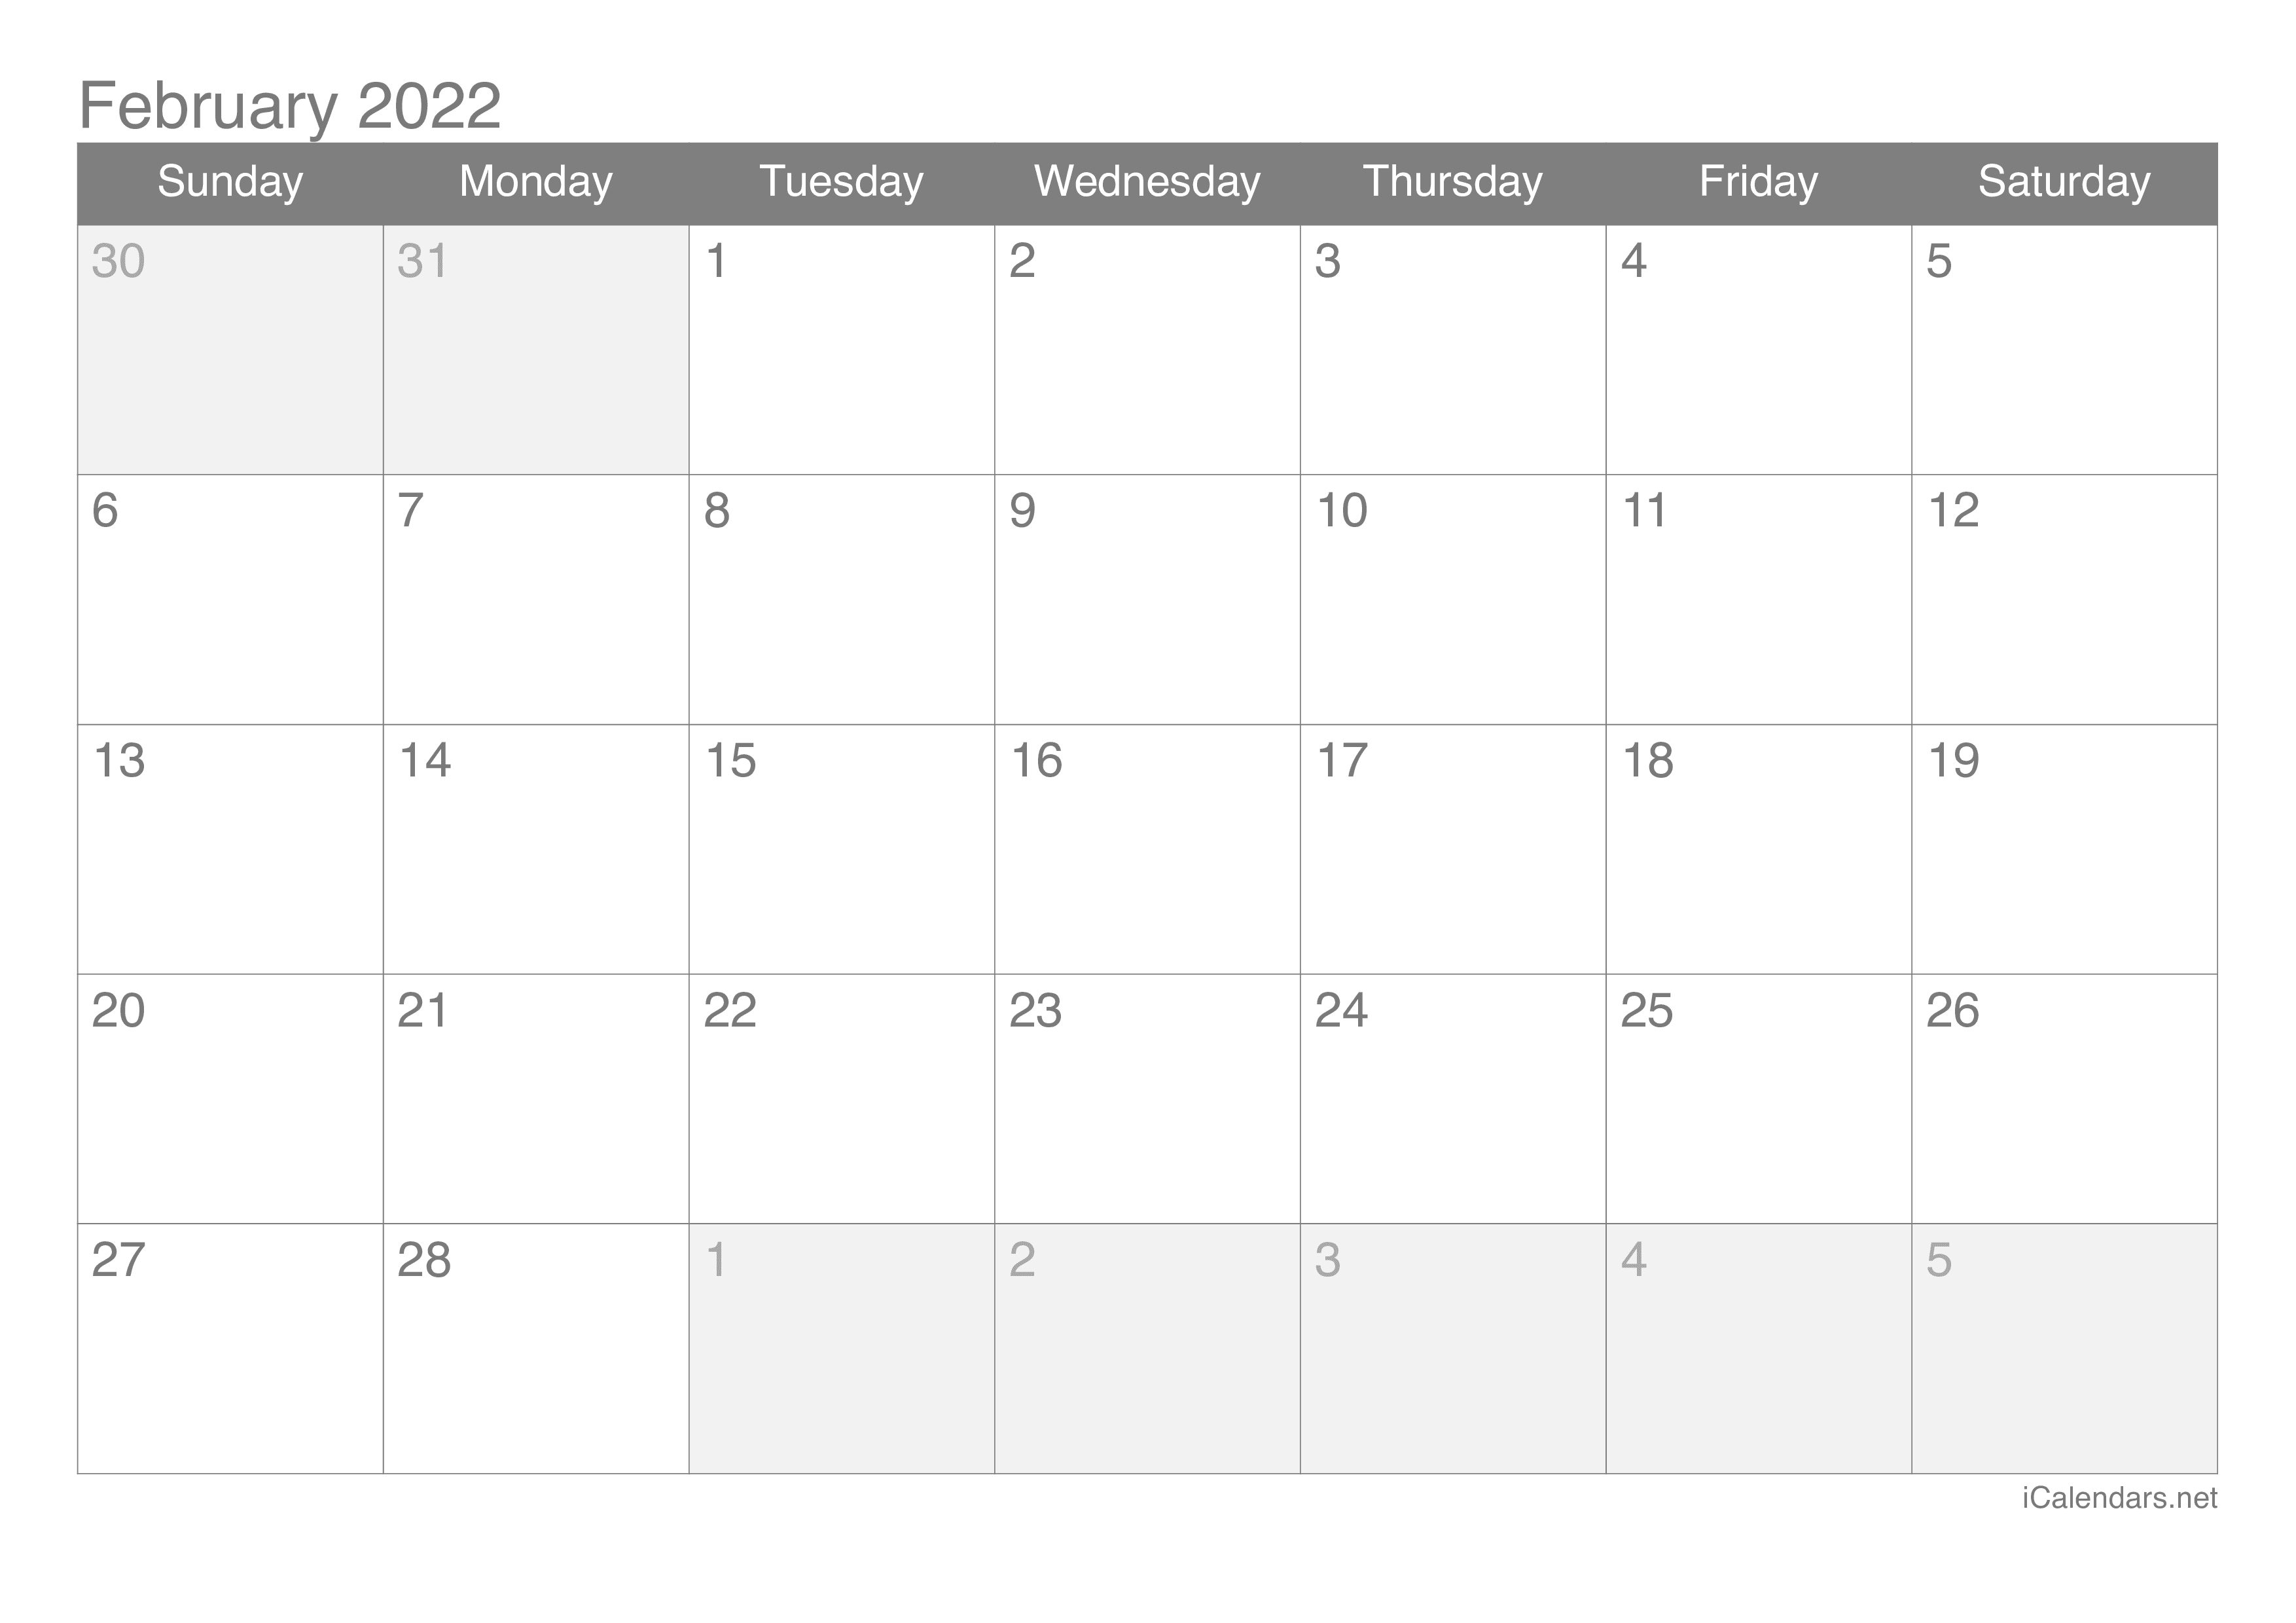 Print Calendar February 2022 February 2022 Printable Calendar - Icalendars.net